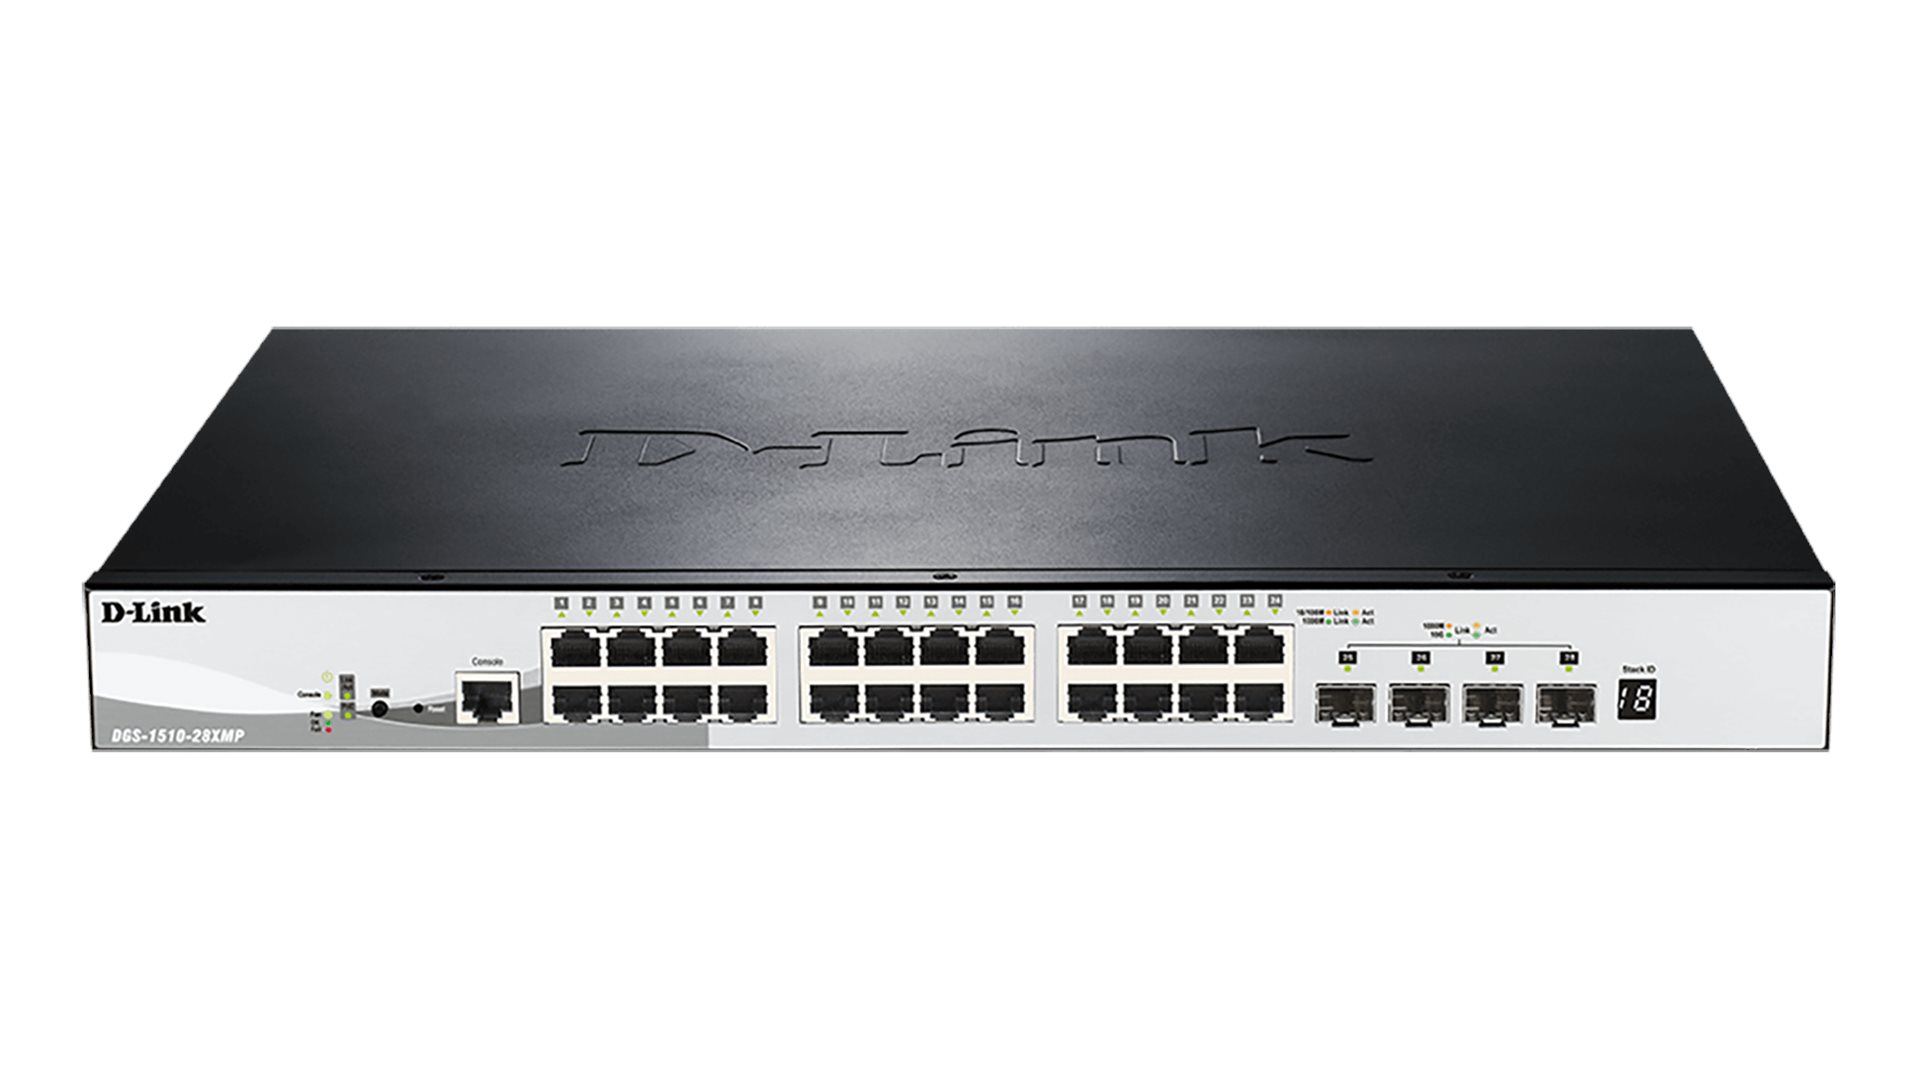 D-Link DGS-1510-28XMP 28-Port Gigabit Stackable POE Smart Managed Switch including 4x 10G SFP+